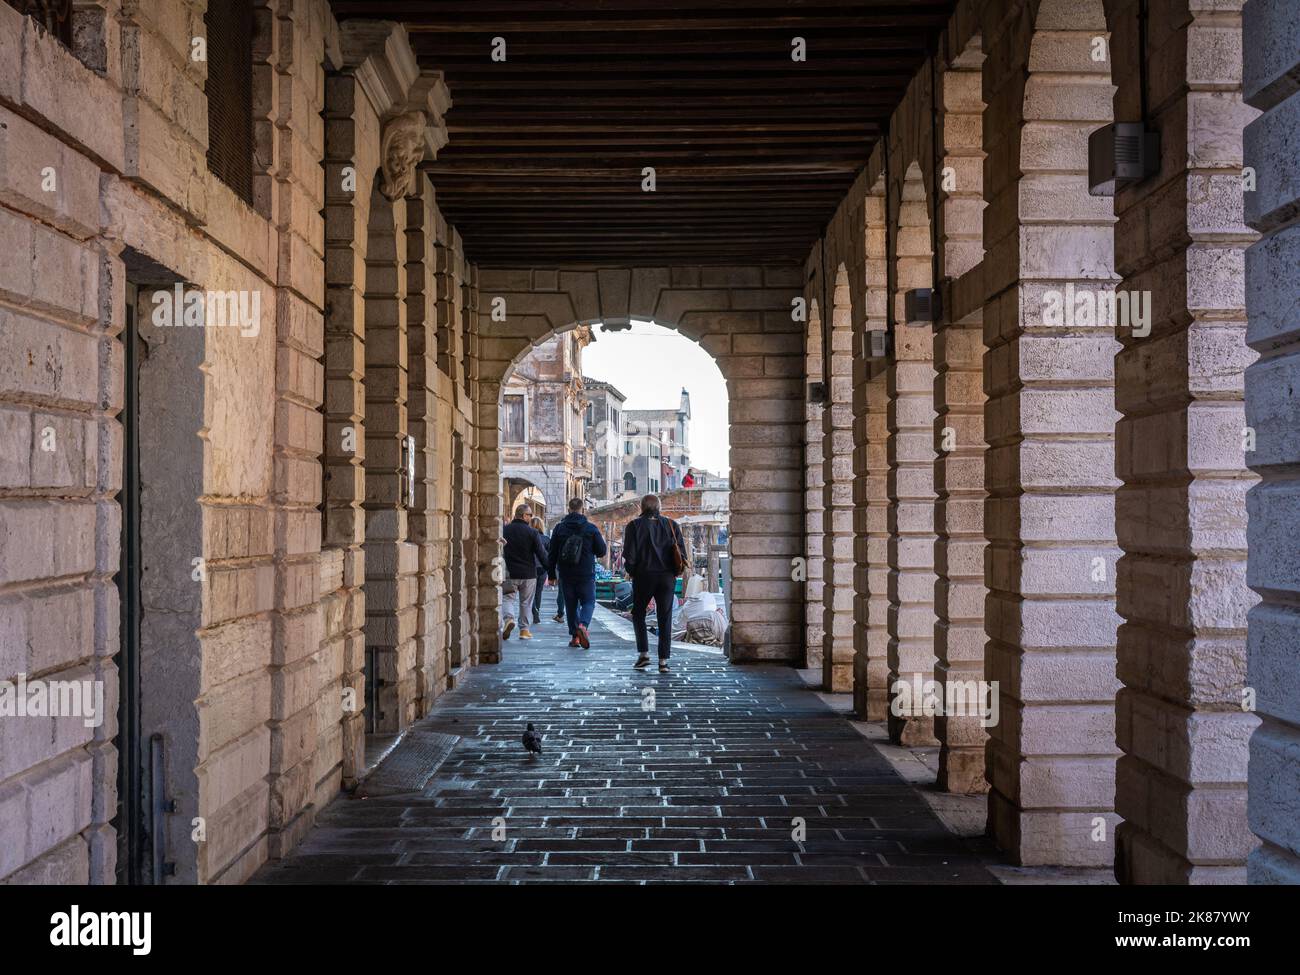 Street in the historic town of Chioggia, Venetian lagoon, Veneto region, northern Italy - people walking Stock Photo